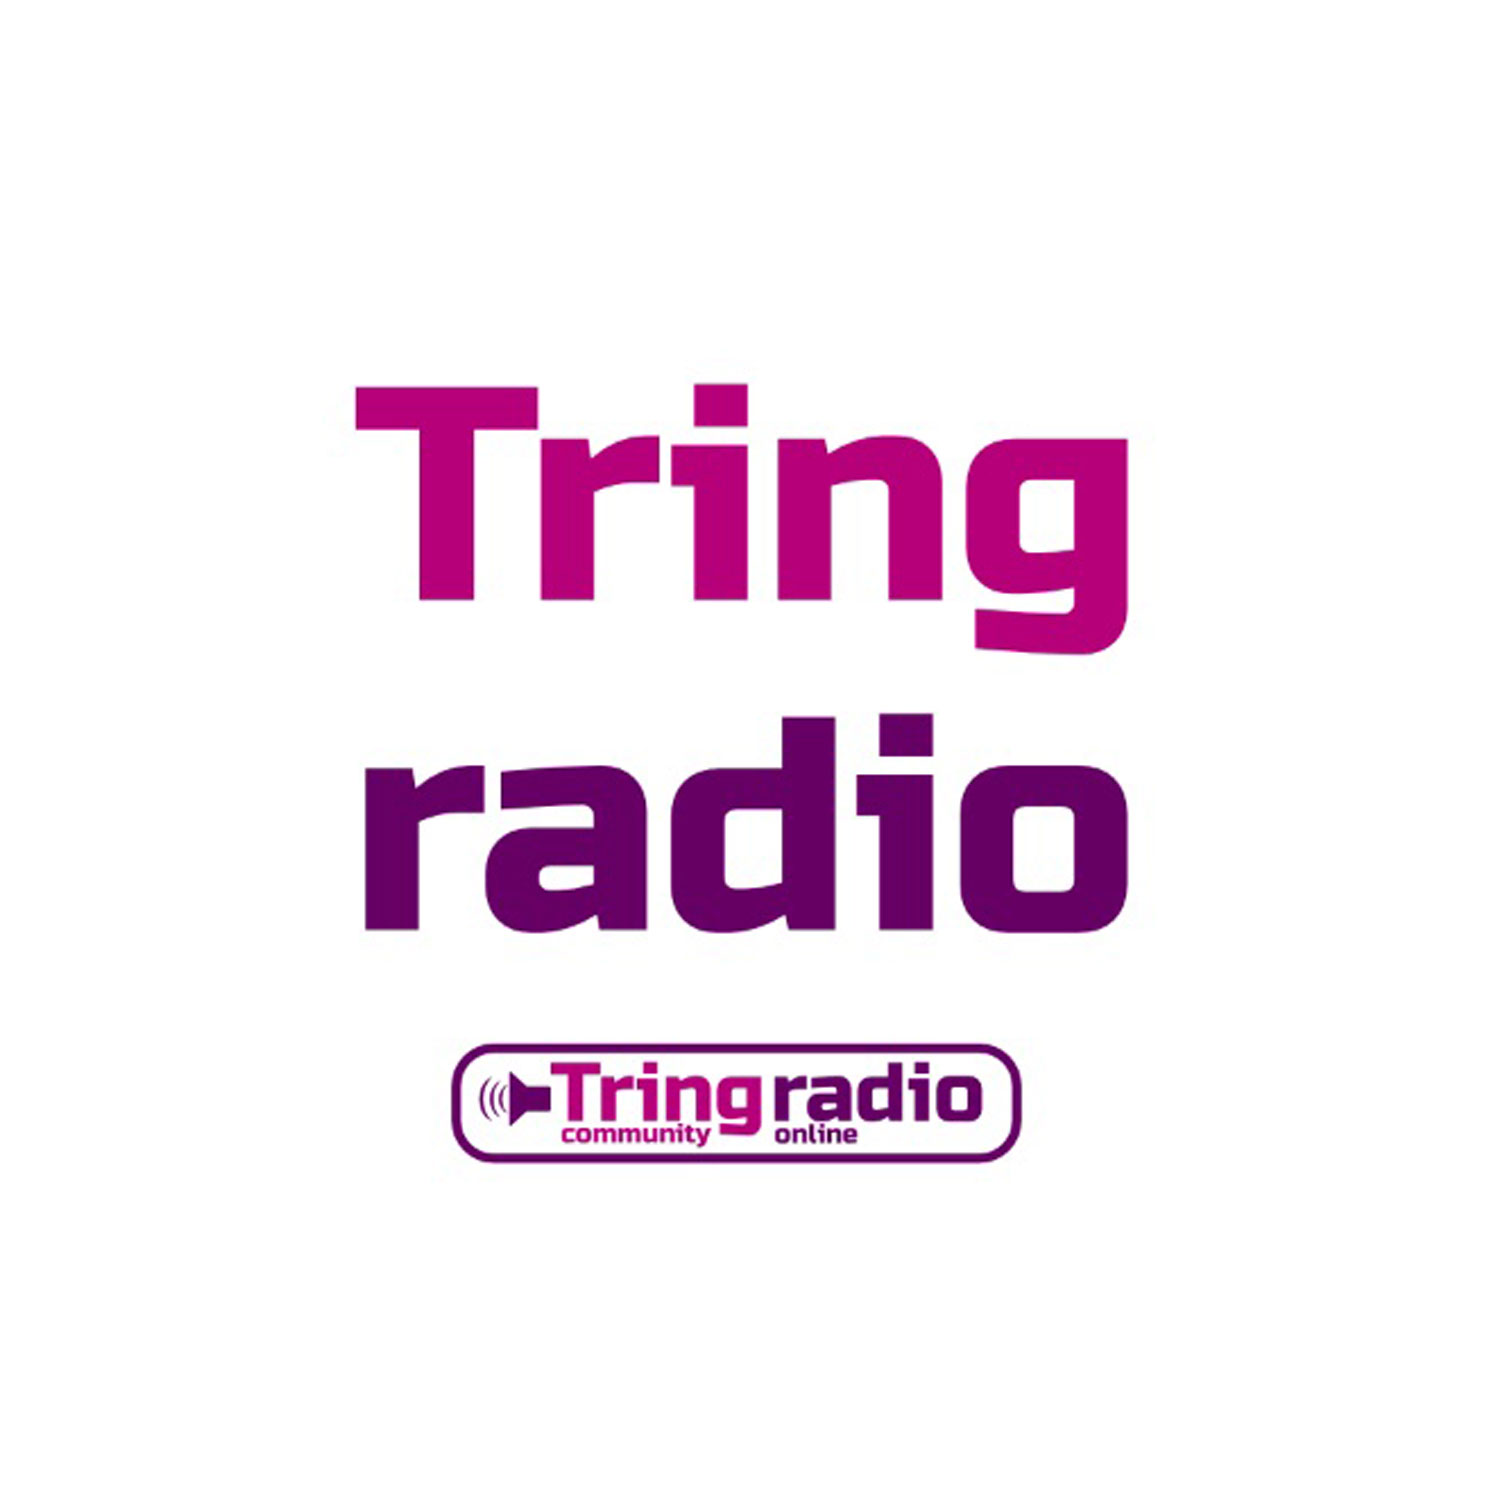 Tring Radio